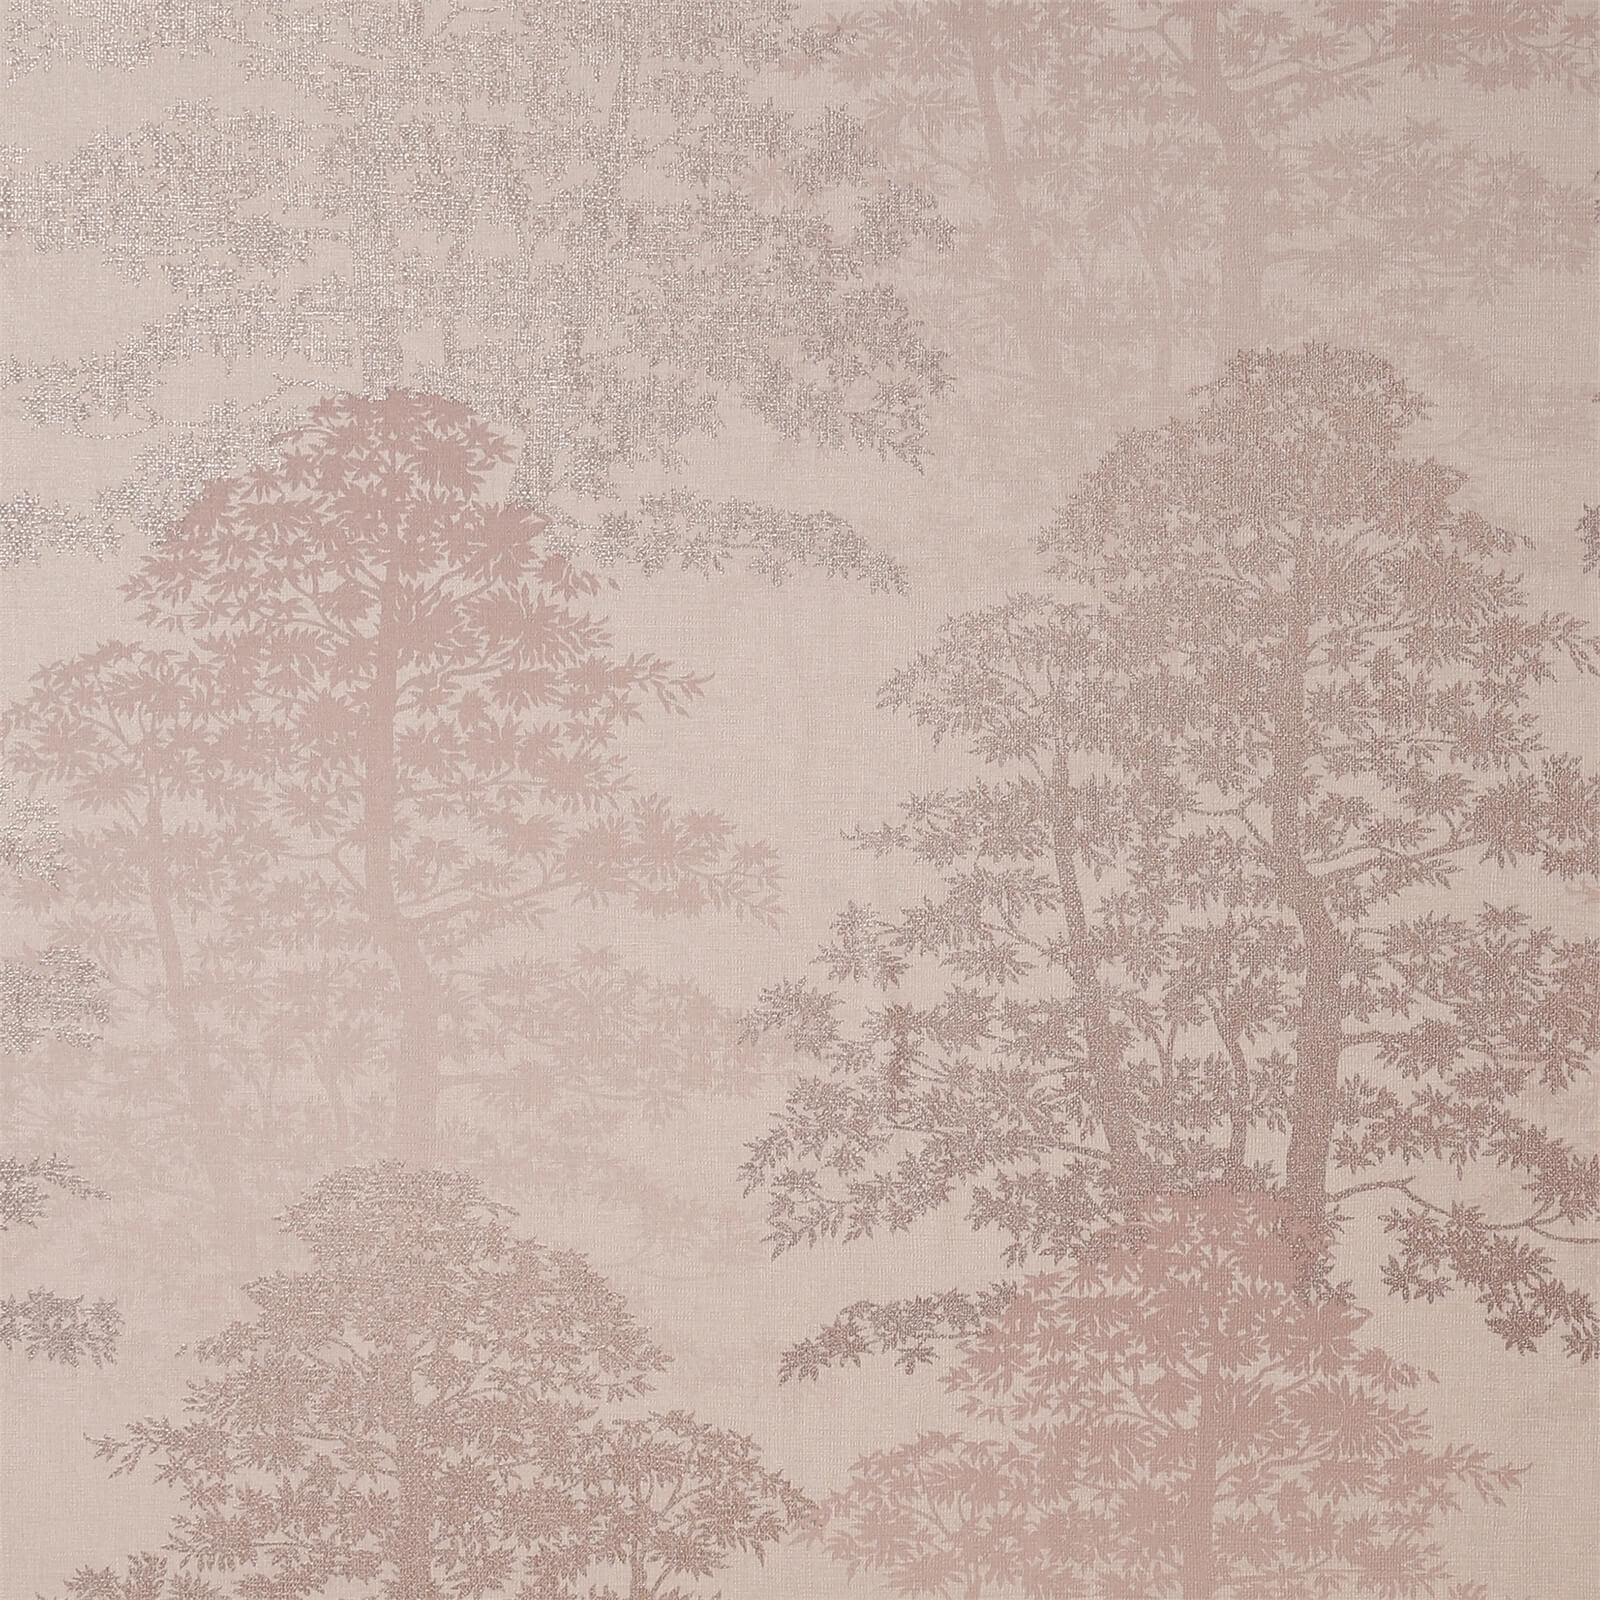 Arthouse Oasis Wood Tree Textured Metallic Glitter Blush Wallpaper